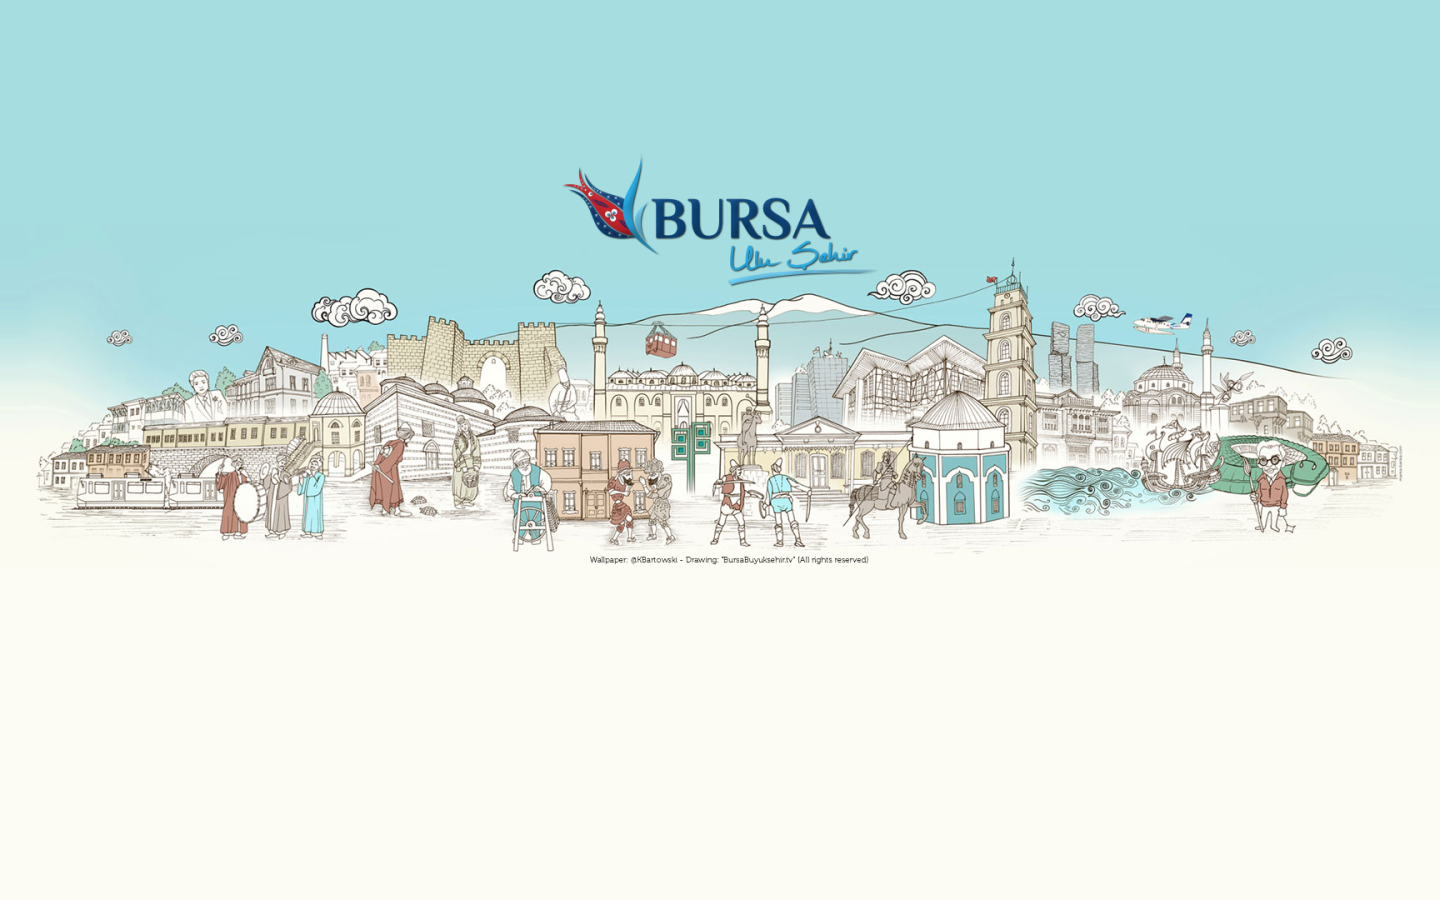 Resort town of Bursa, Turkey